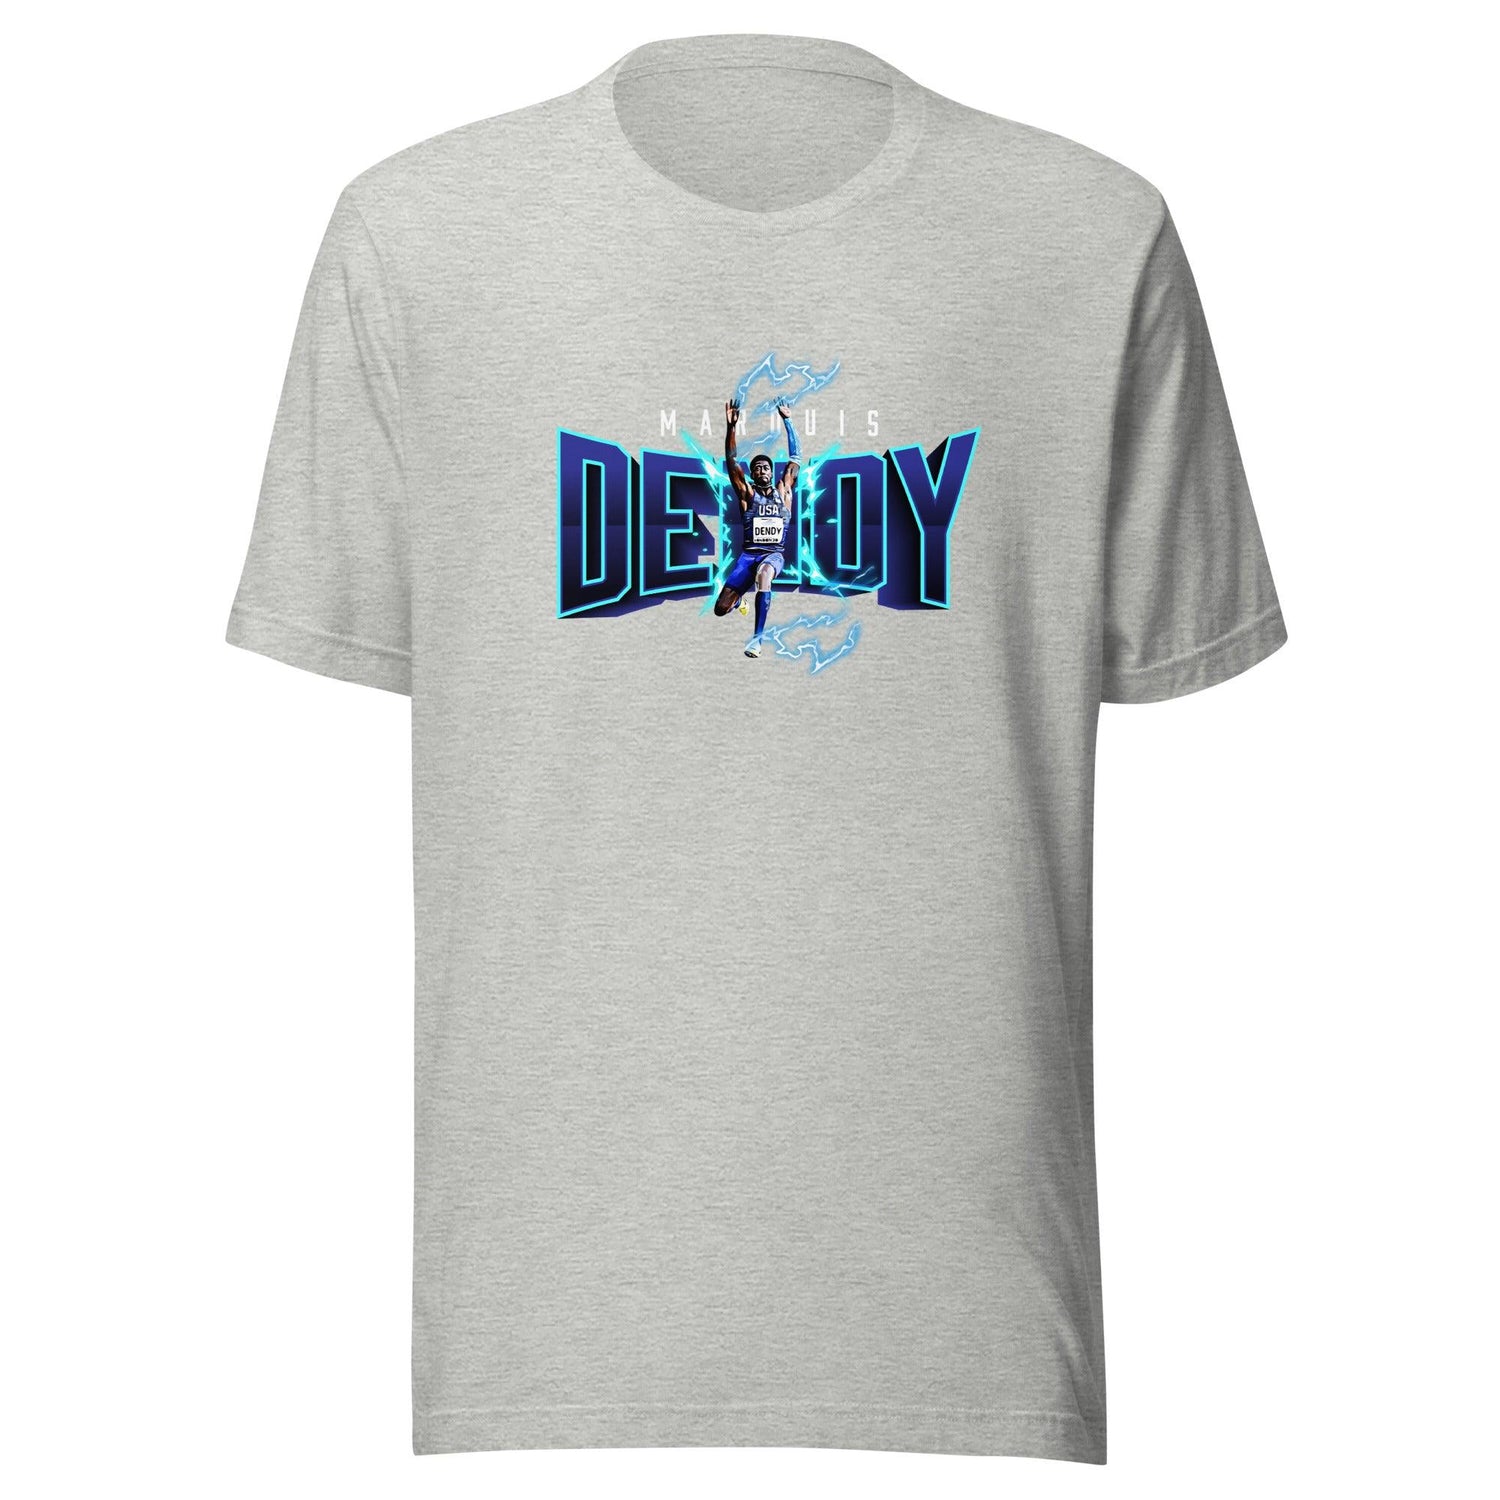 Marquis Dendy "Electric" t-shirt - Fan Arch